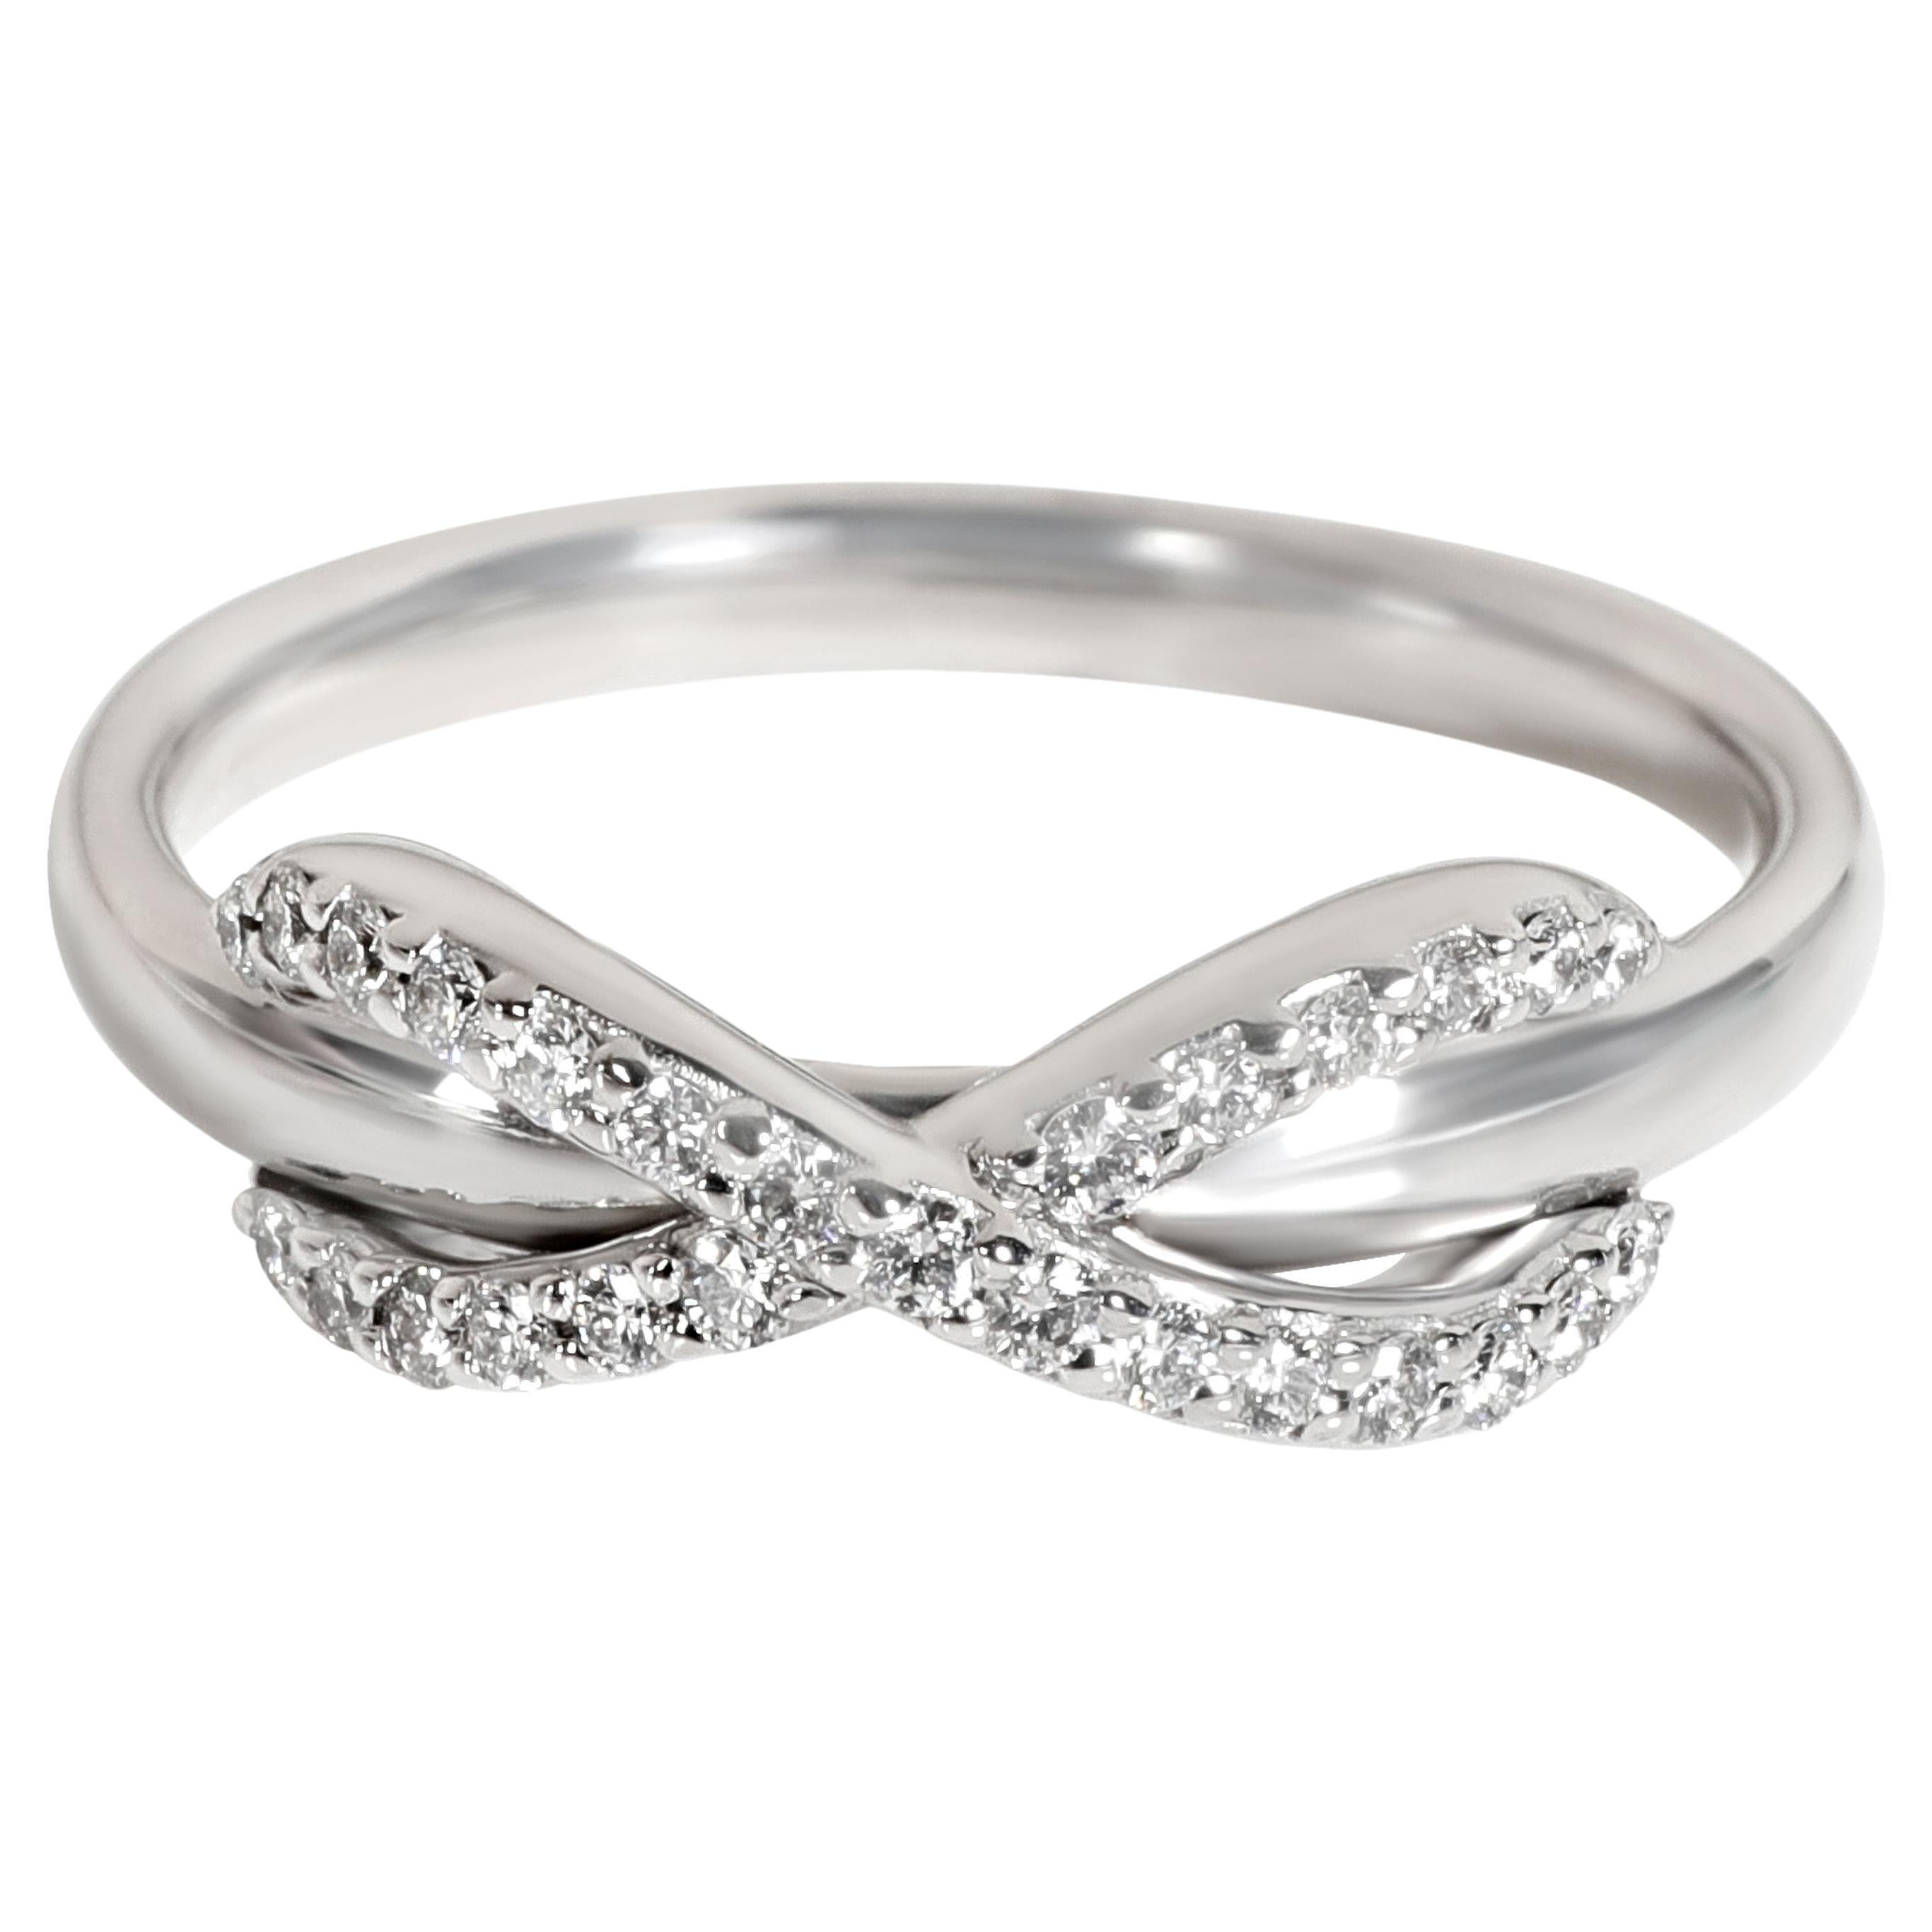 Tiffany & Co. Infinity Diamond Ring in 18k White Gold 0.13 CTW